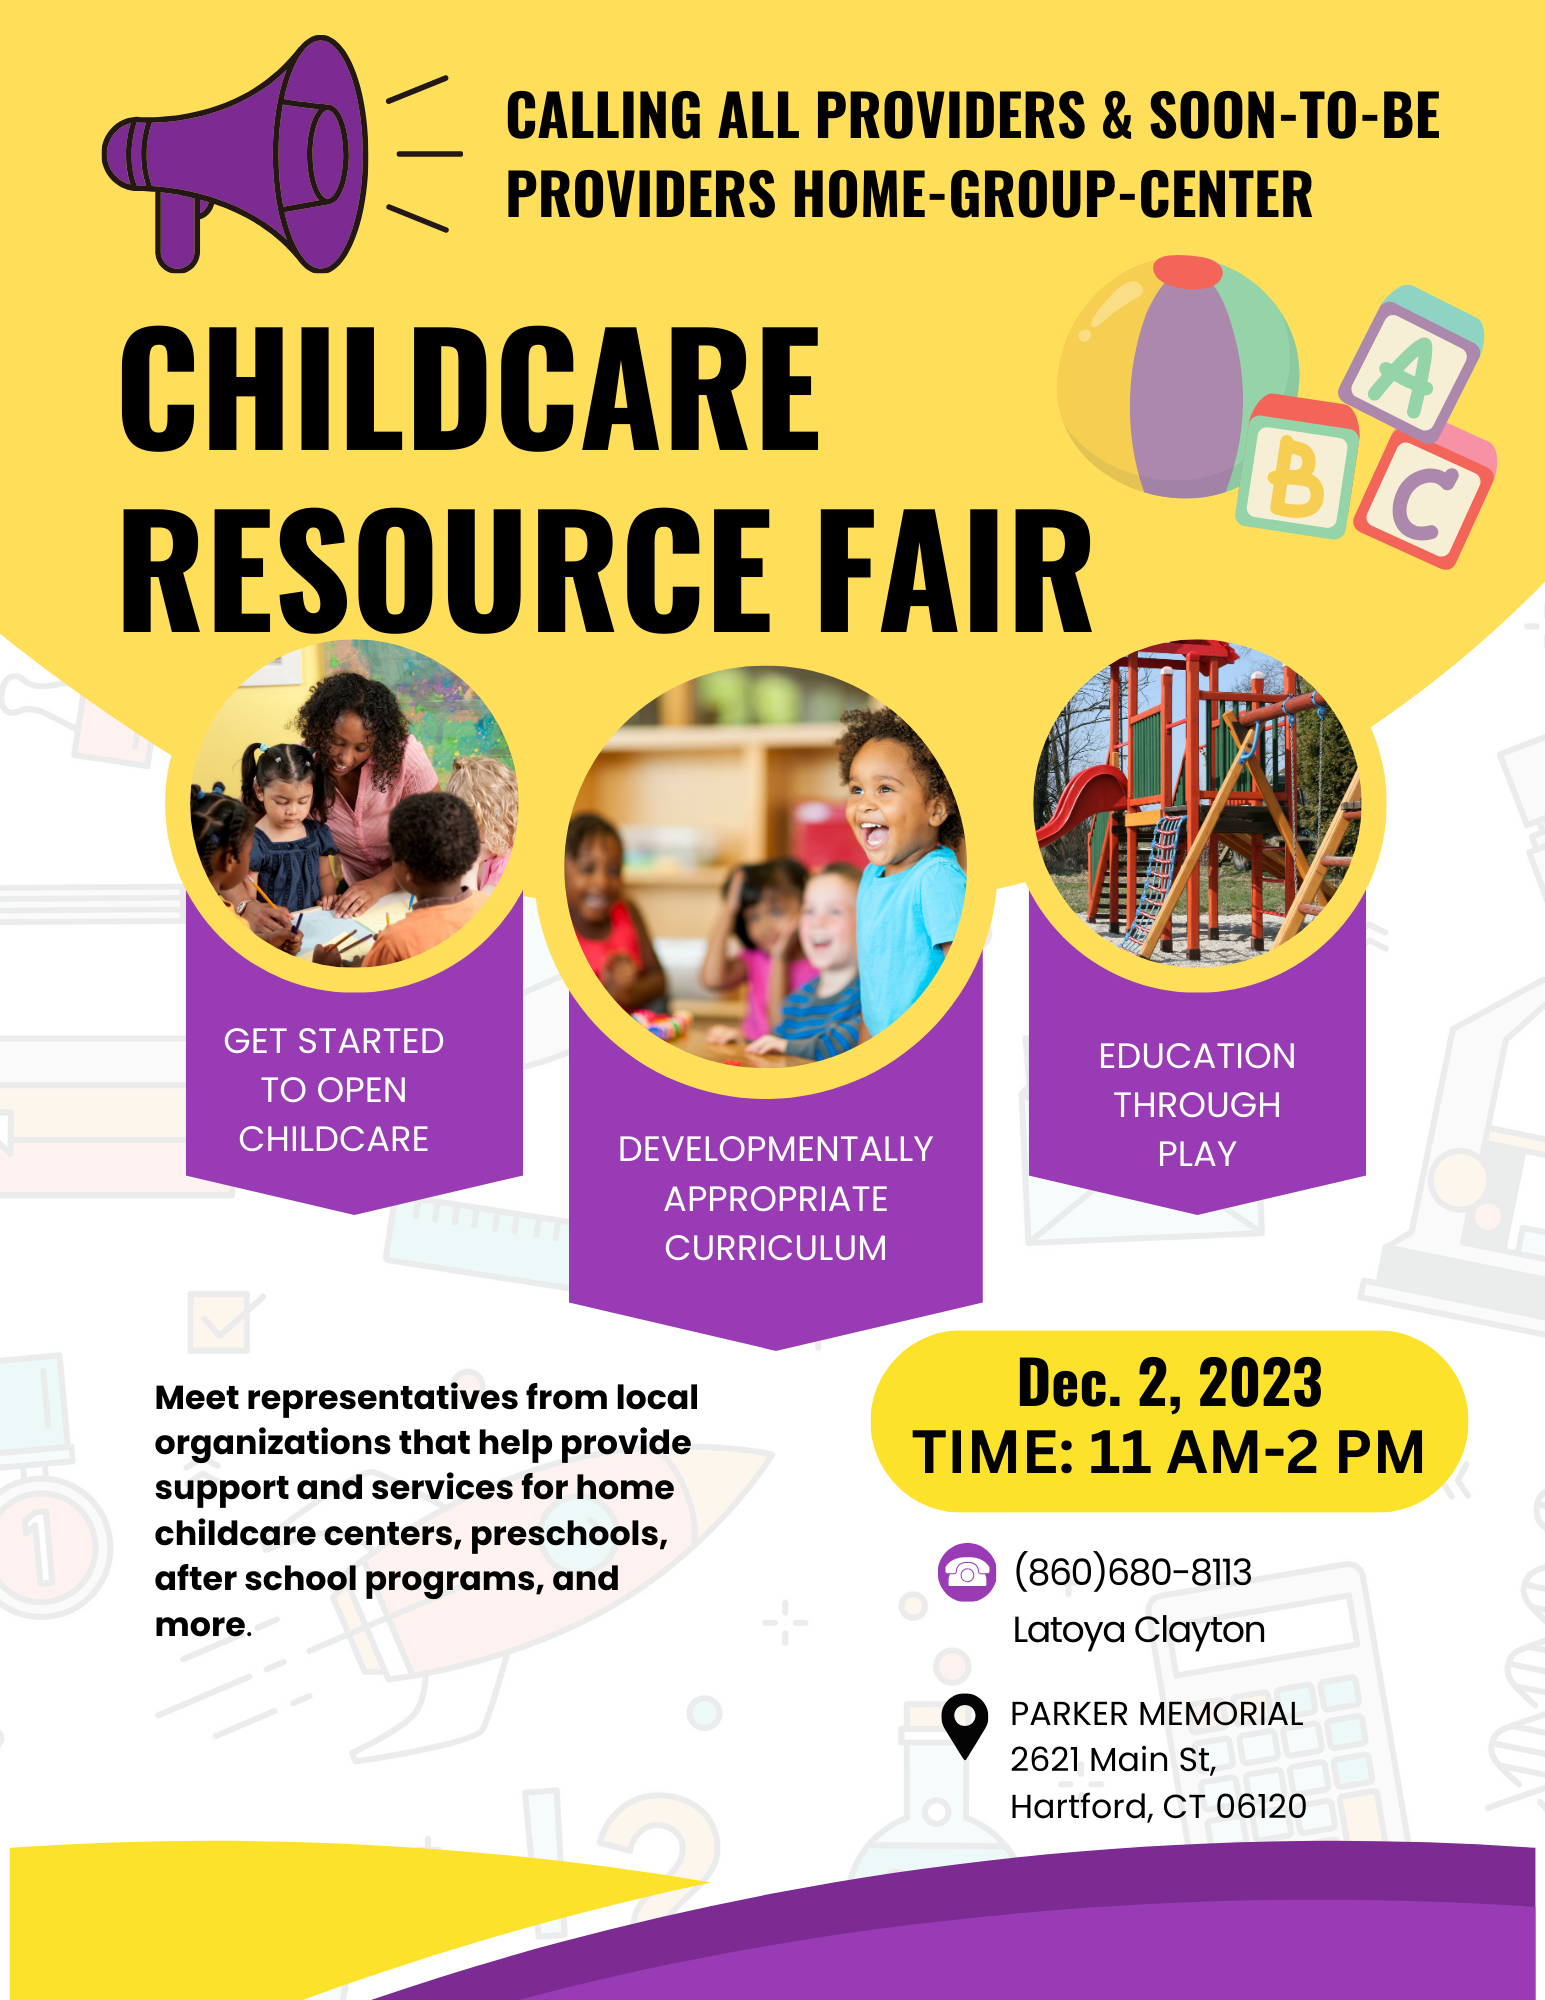 Childcare Resource Fair 12/2/23